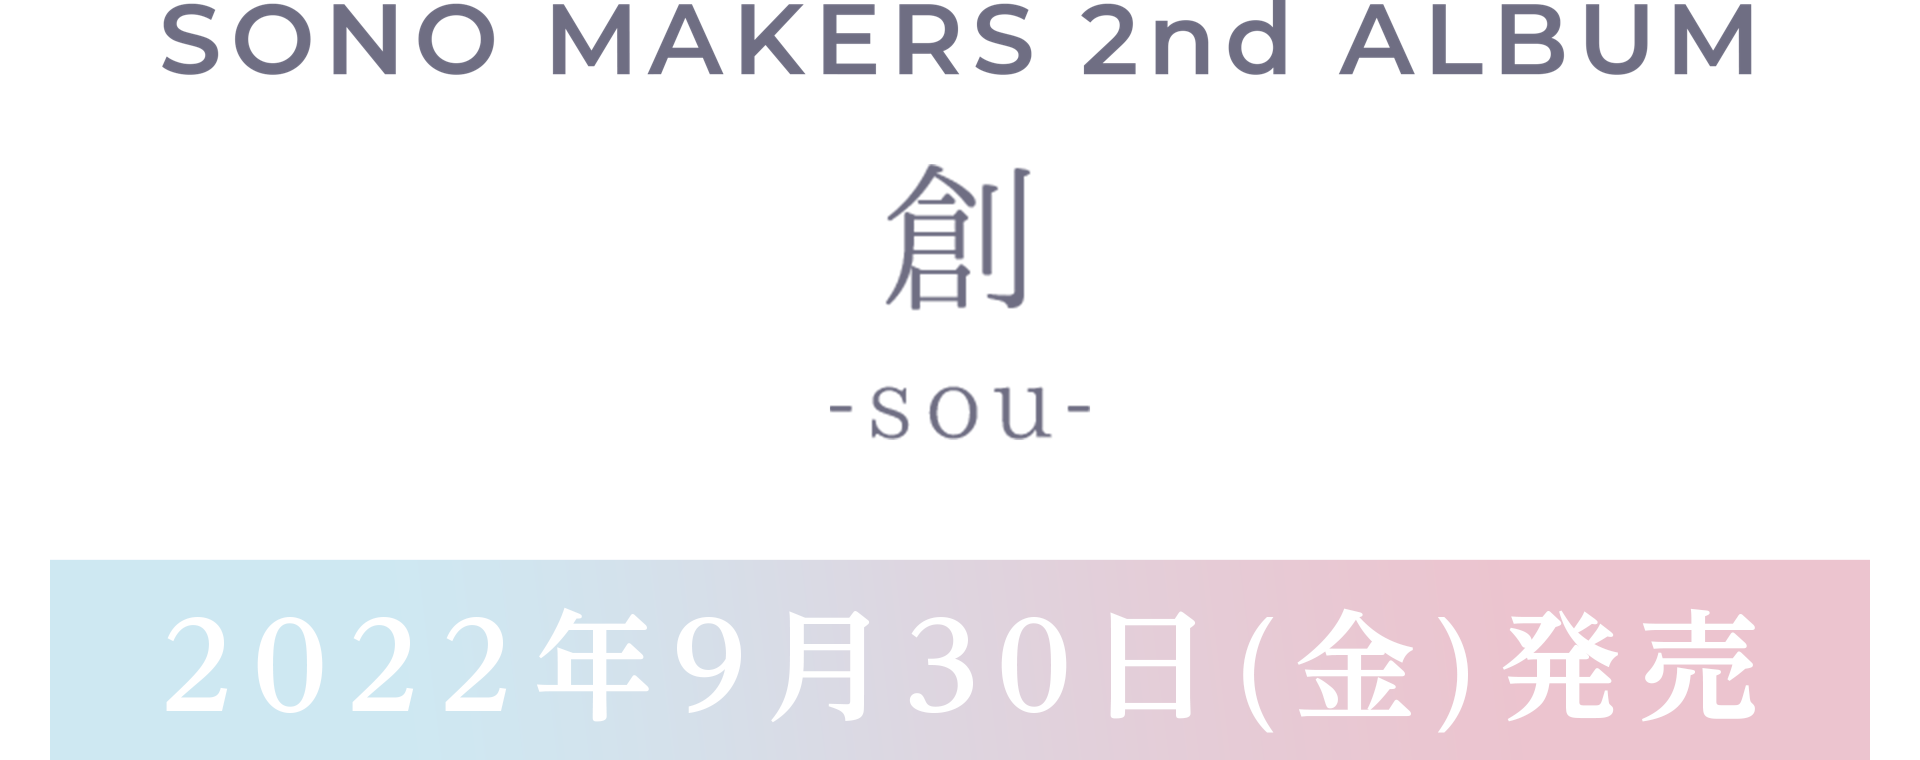 SONO MAKERS 2nd ALBUM 創 -sou- 2022年9月30日(金) 発売